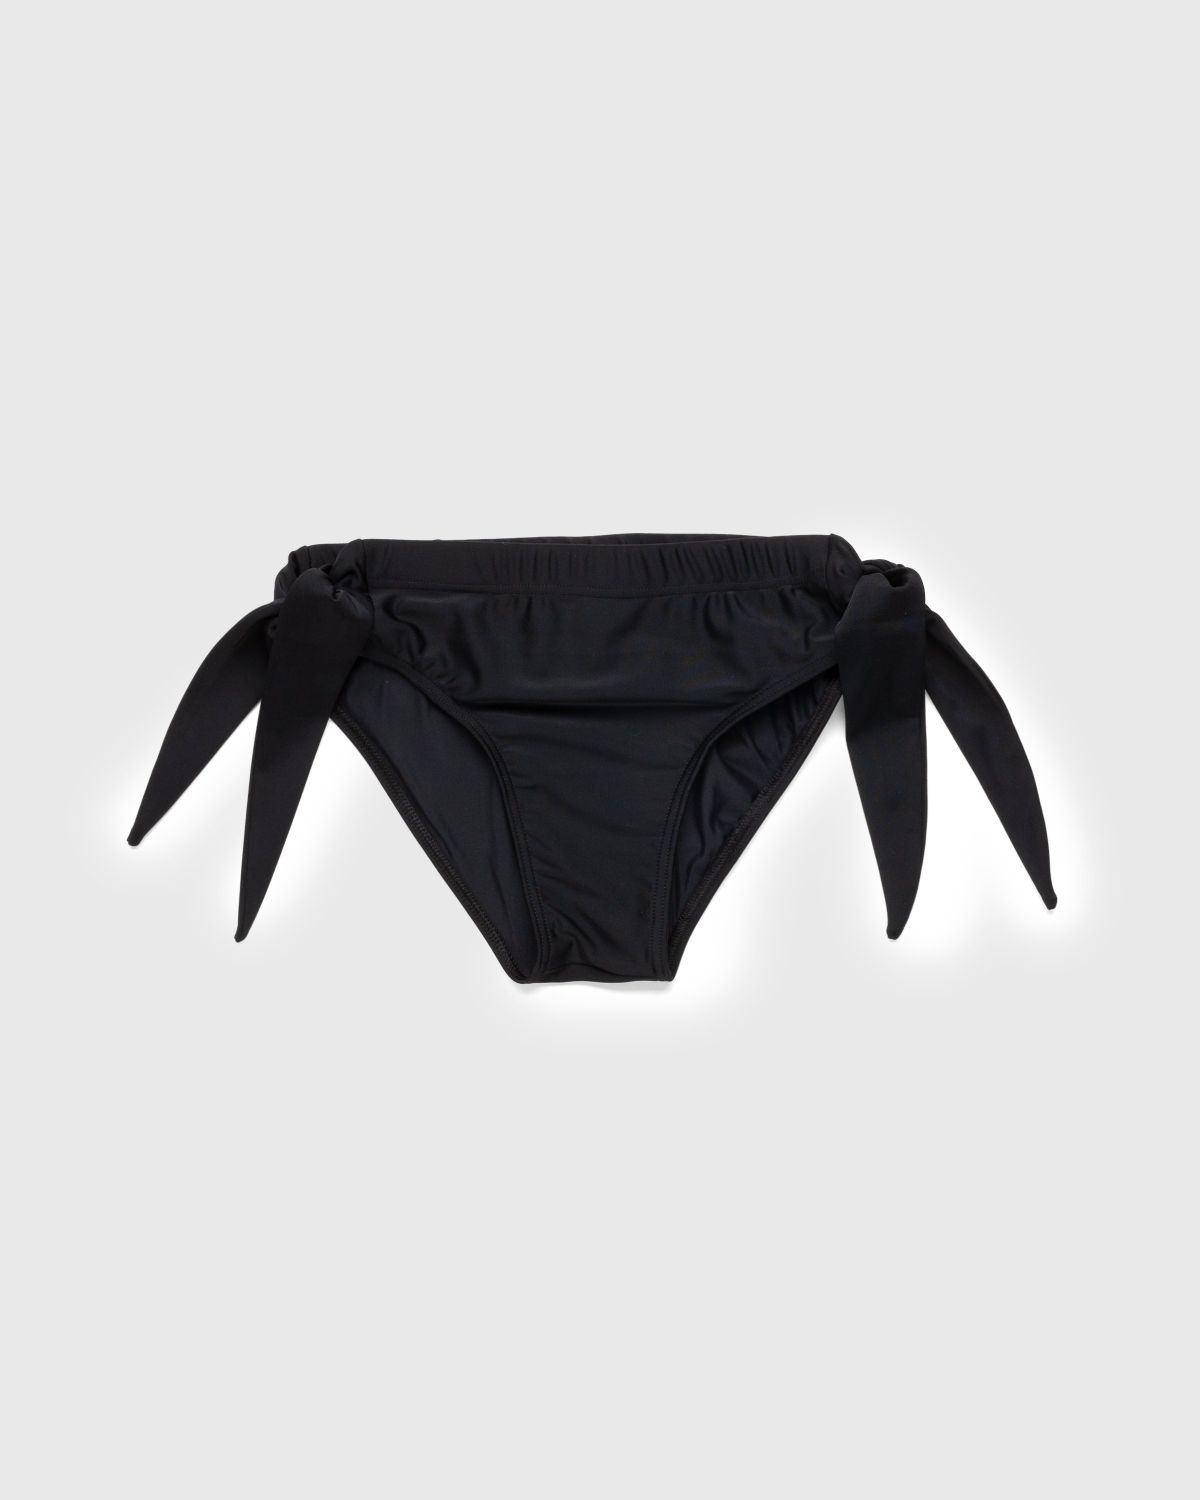 Jean Paul Gaultier – Rhinestone Logo Bikini Bottom Black - Swimwear - Black - Image 2